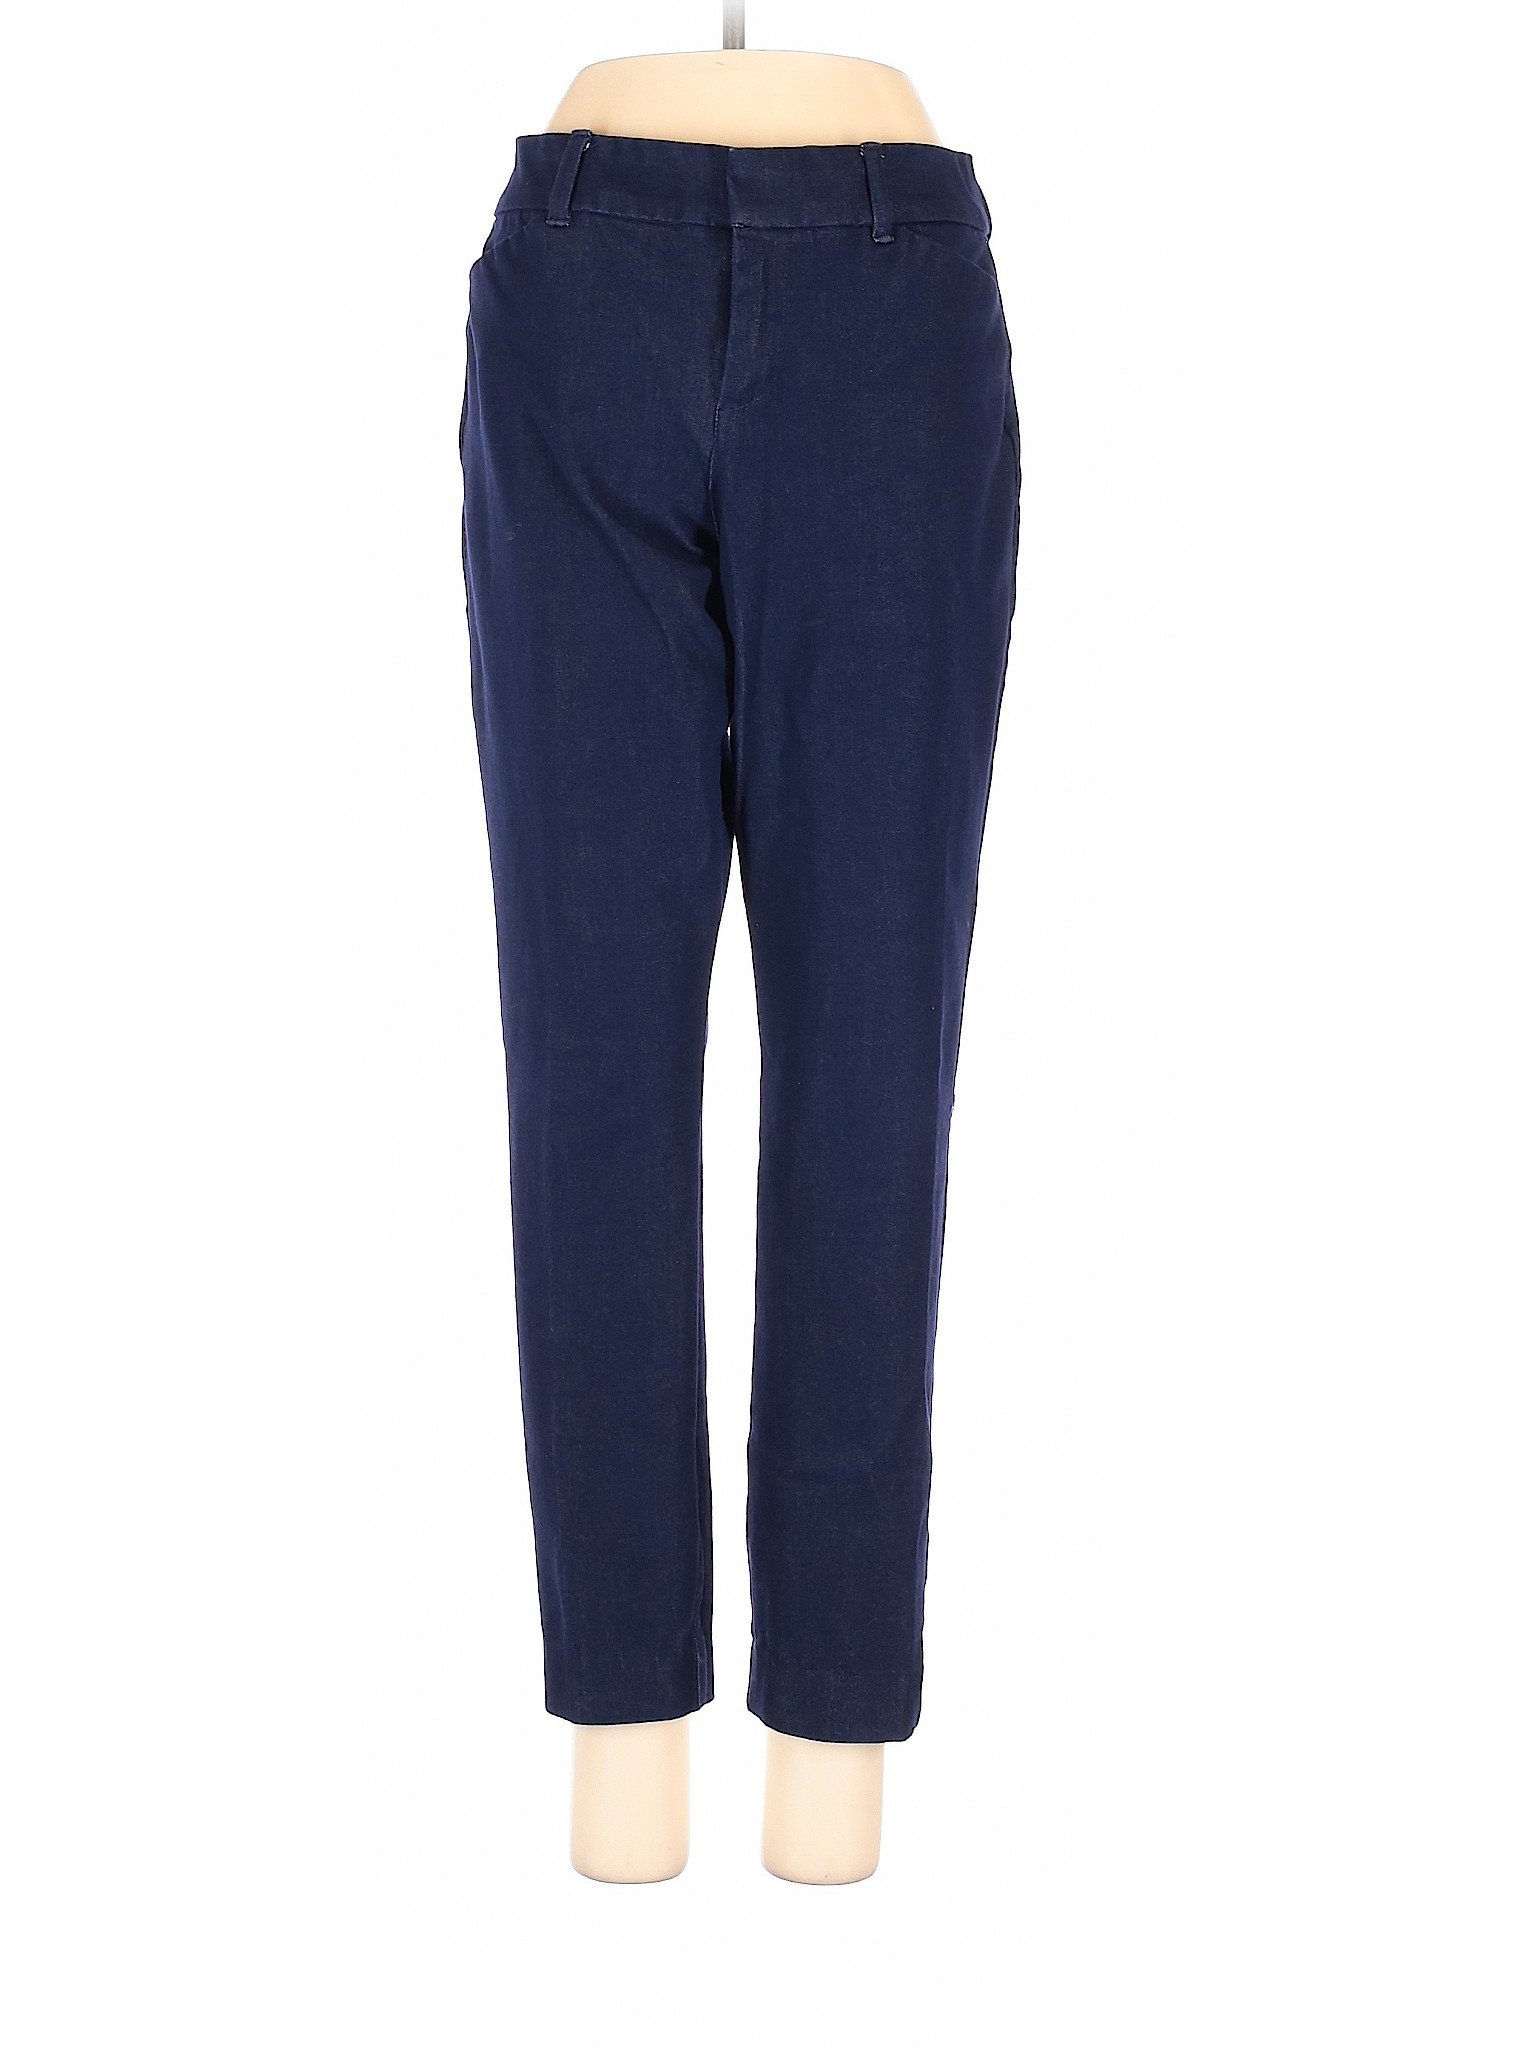 Old Navy Women Blue Casual Pants 4 | eBay